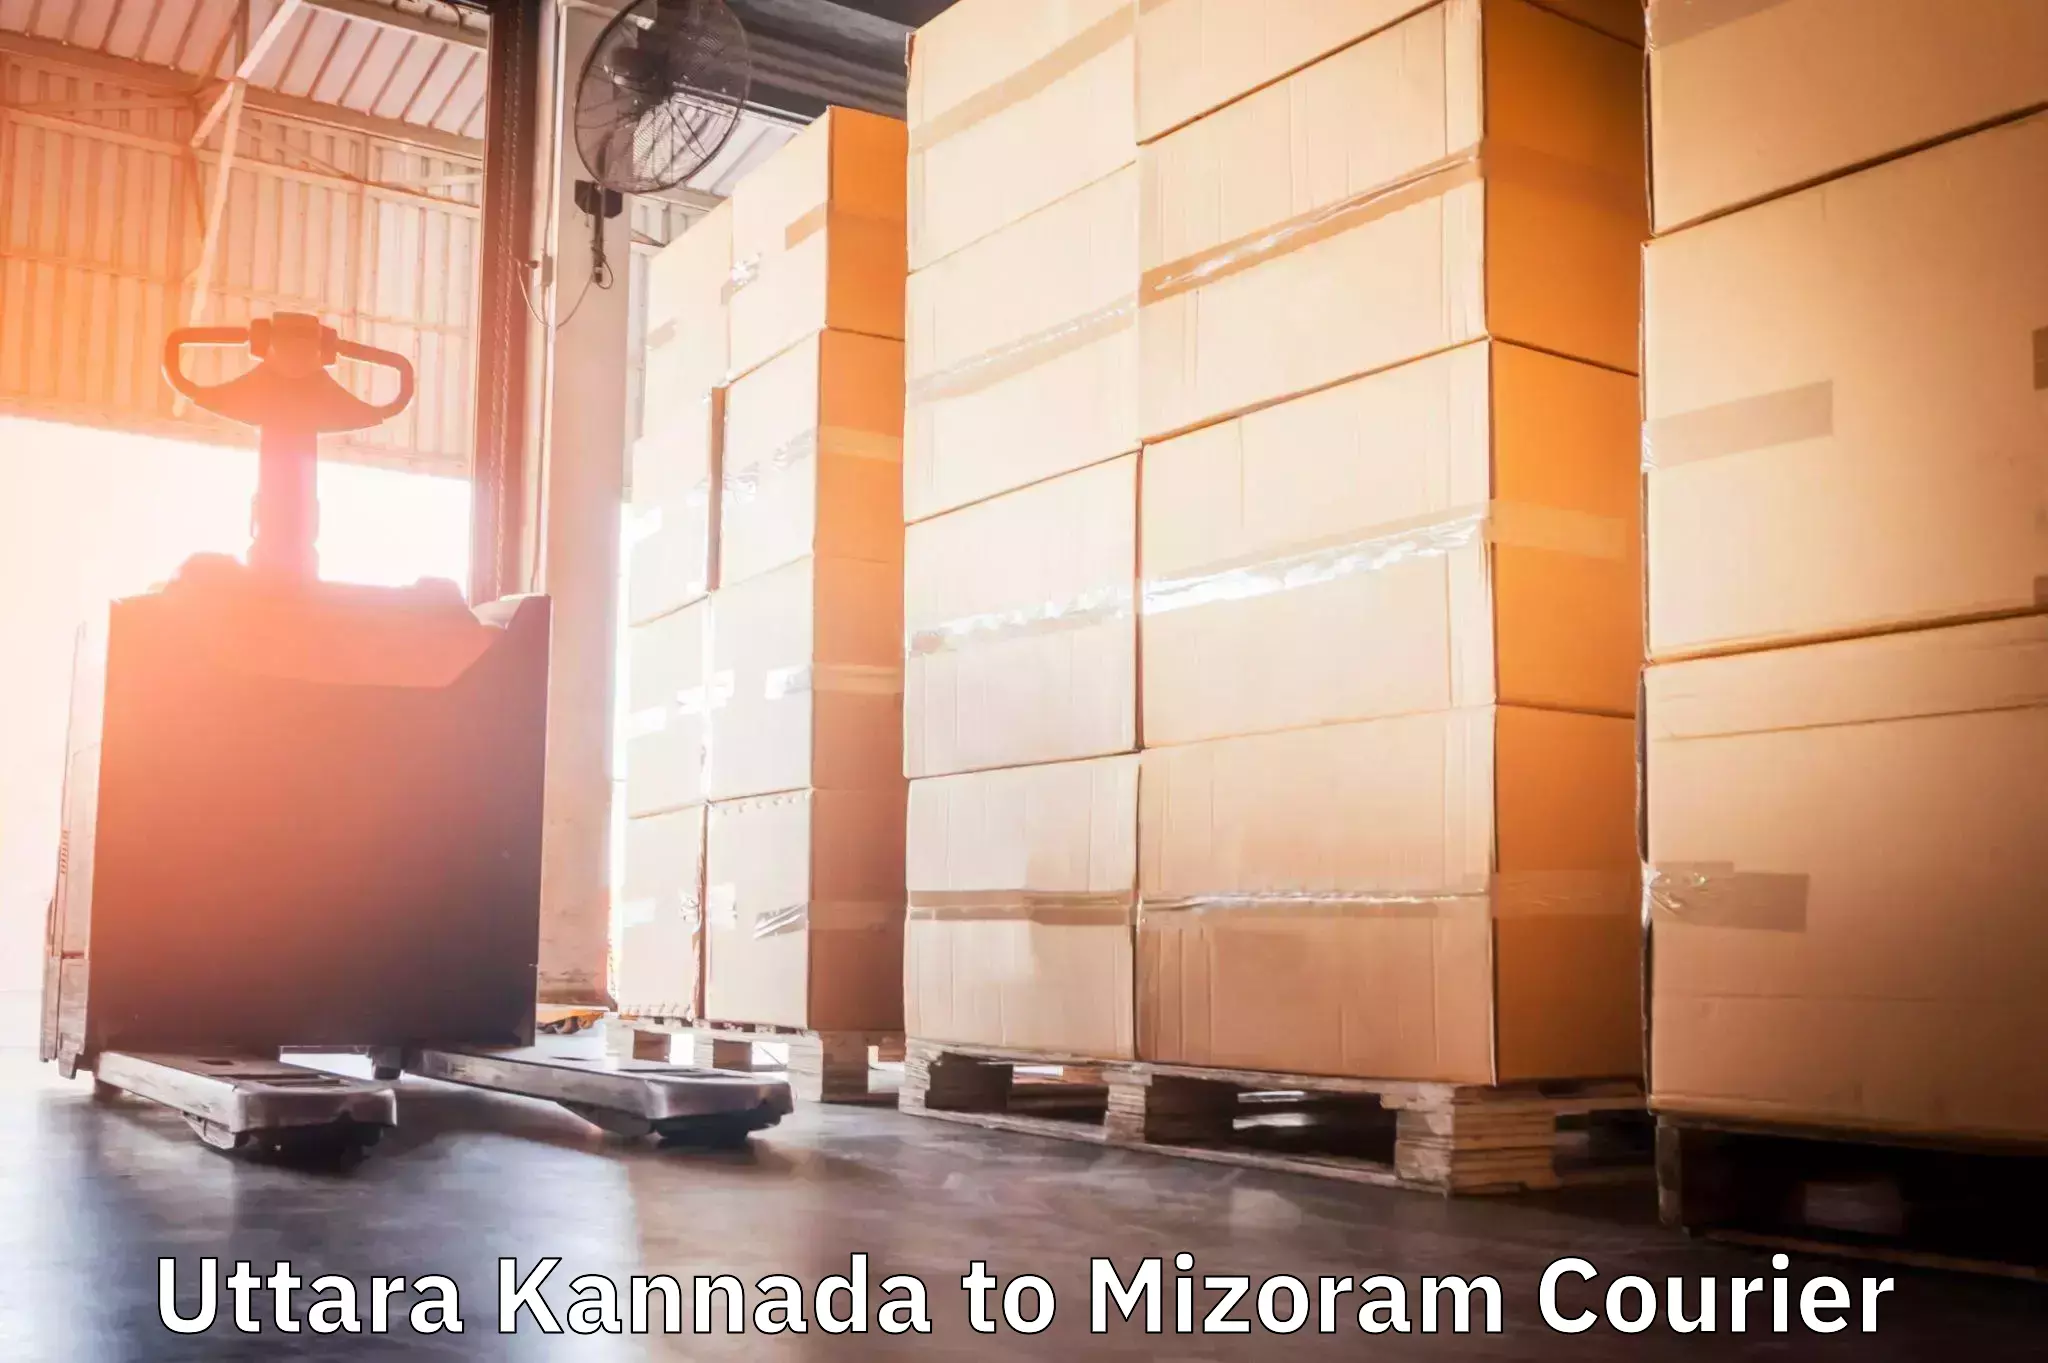 Professional courier handling Uttara Kannada to Mizoram